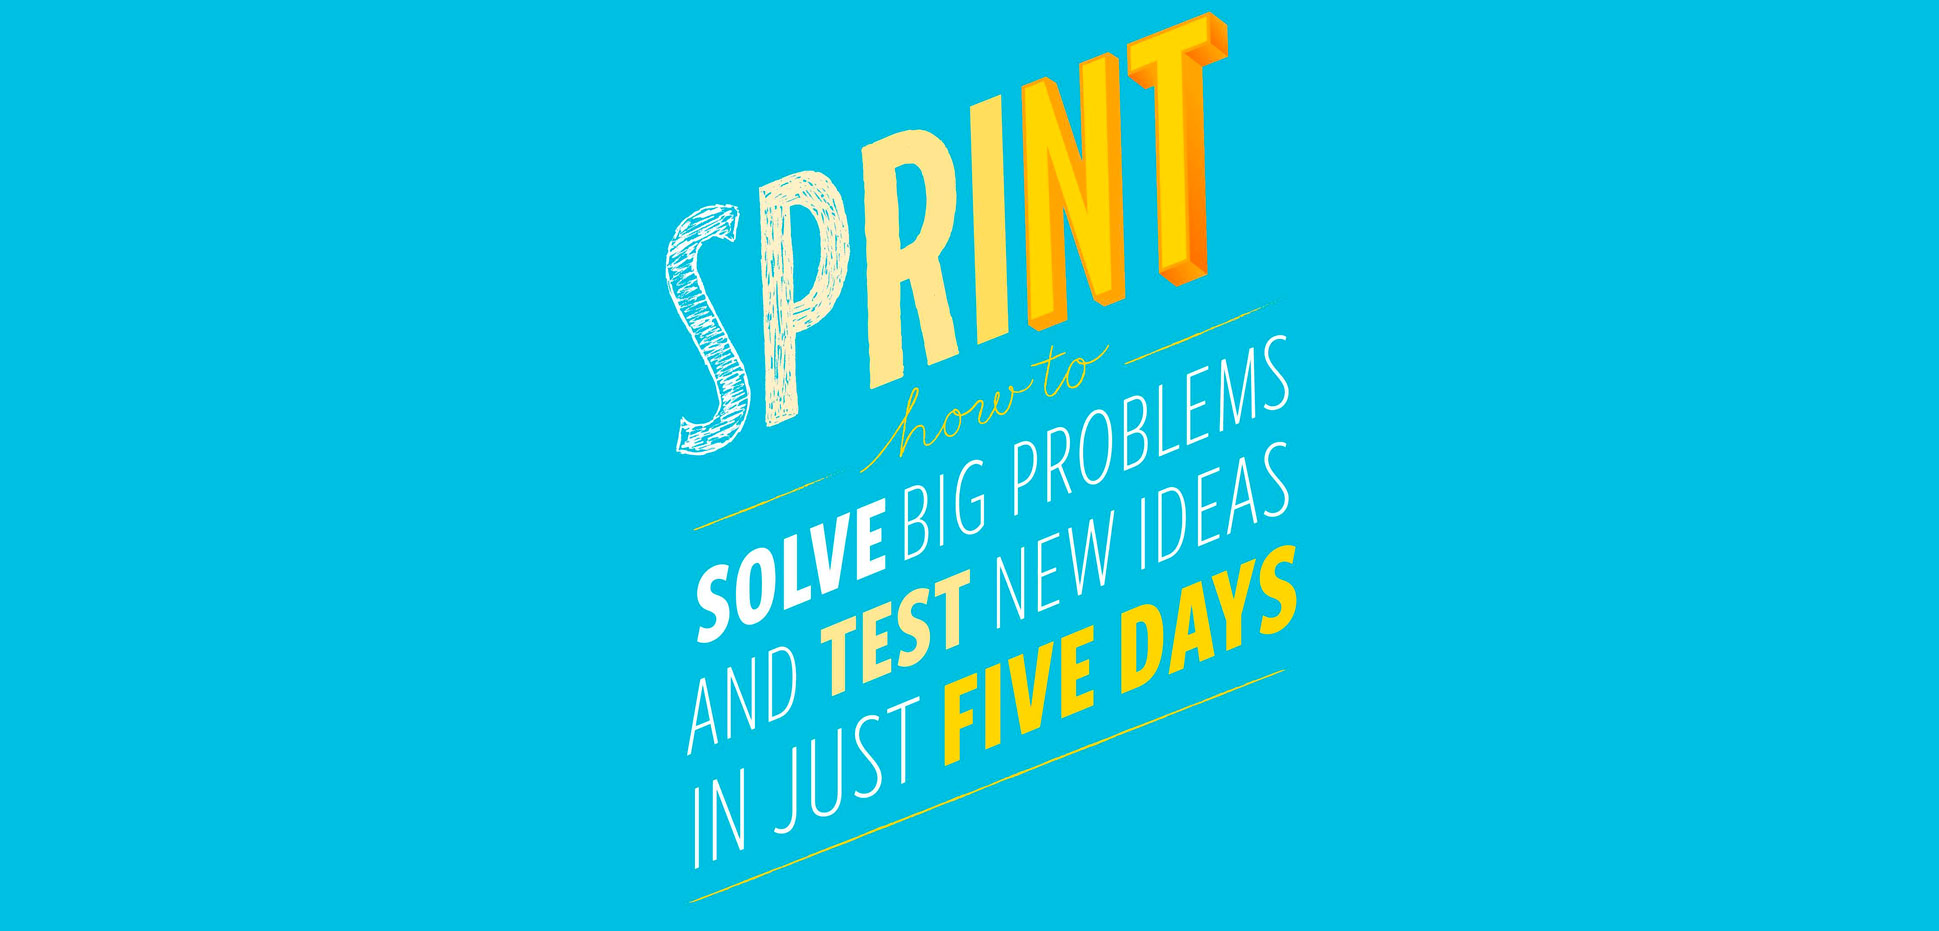 design sprint book cover